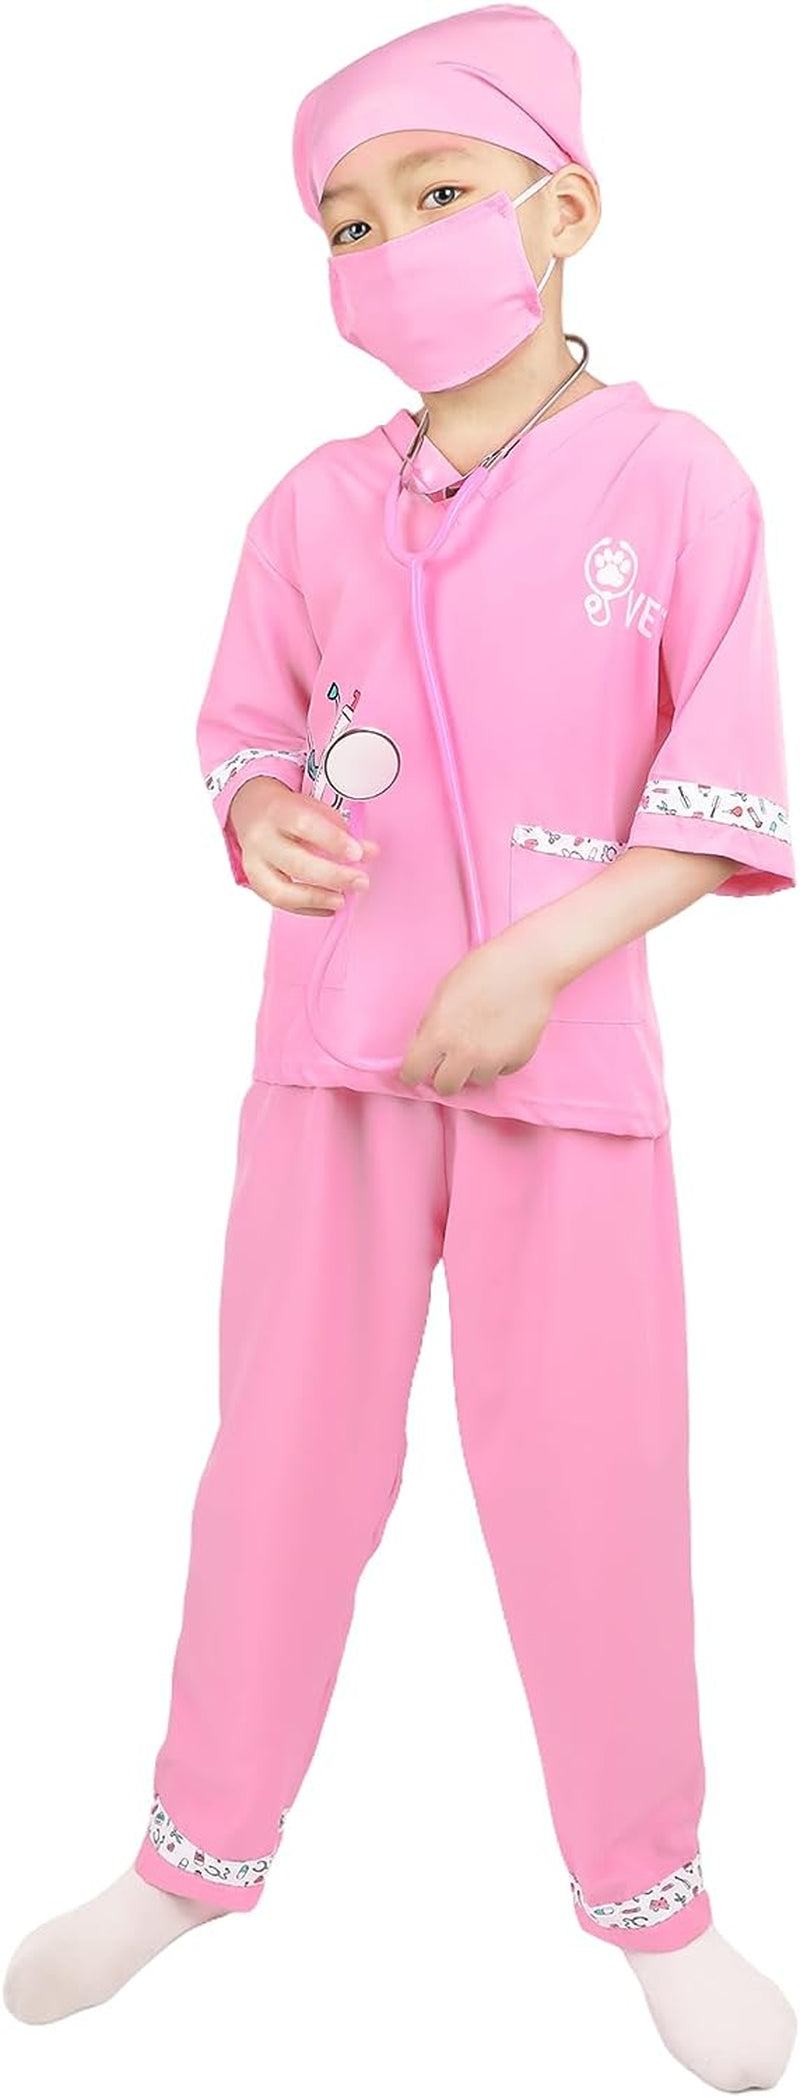 ANPHILE Kids Animal Doctor Costume Veterinarian - Halloween Costume for Kids  ANPHILE   